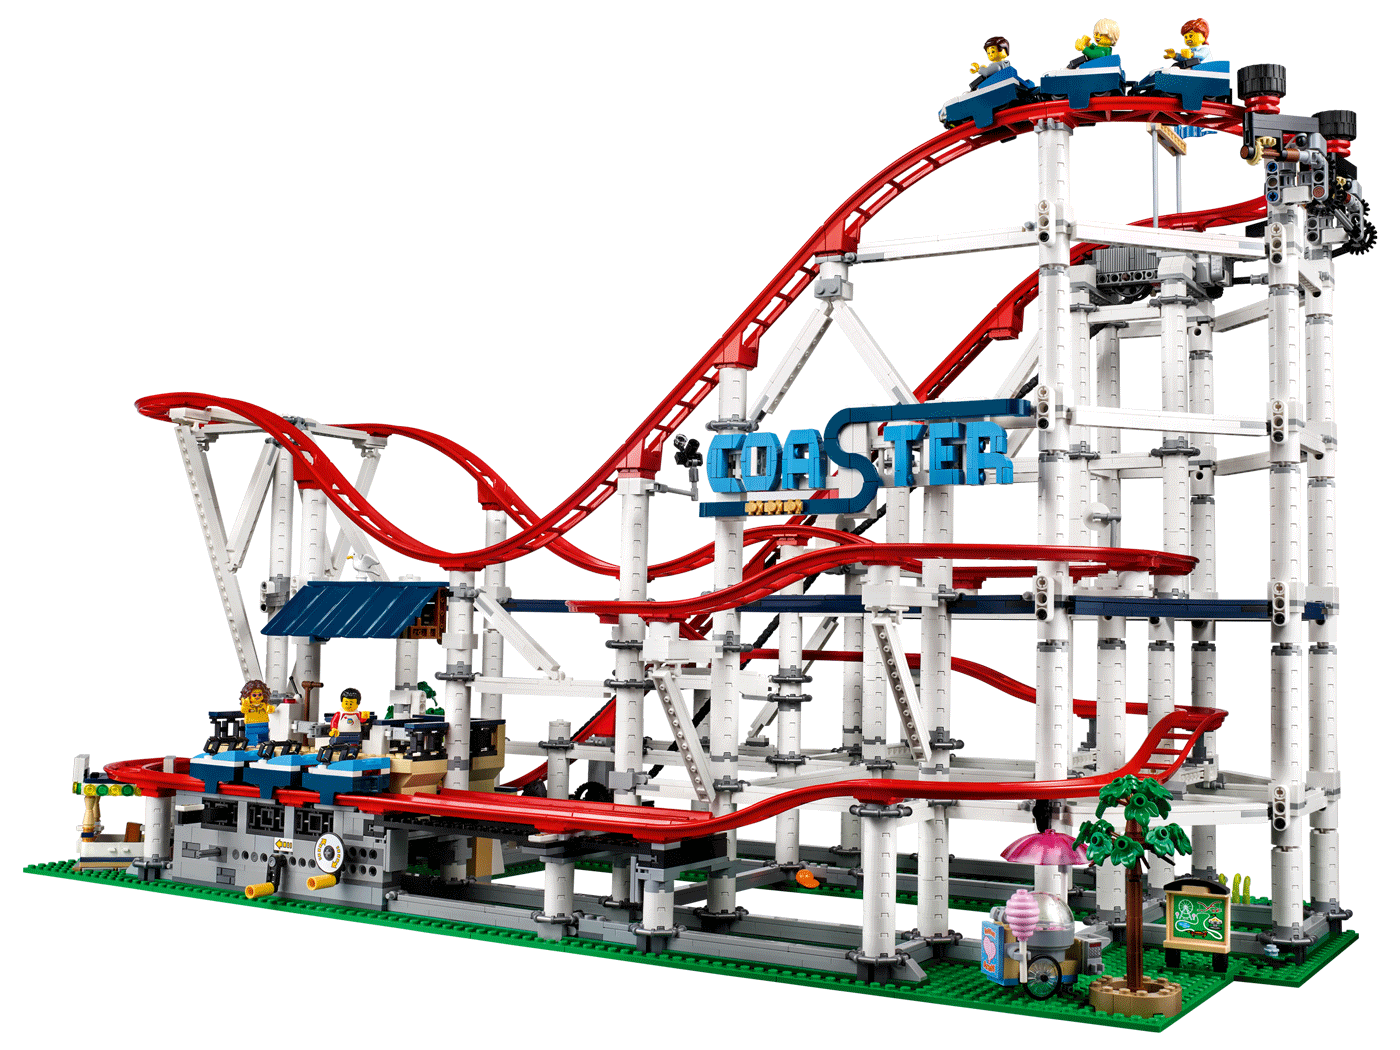 LEGO Coaster